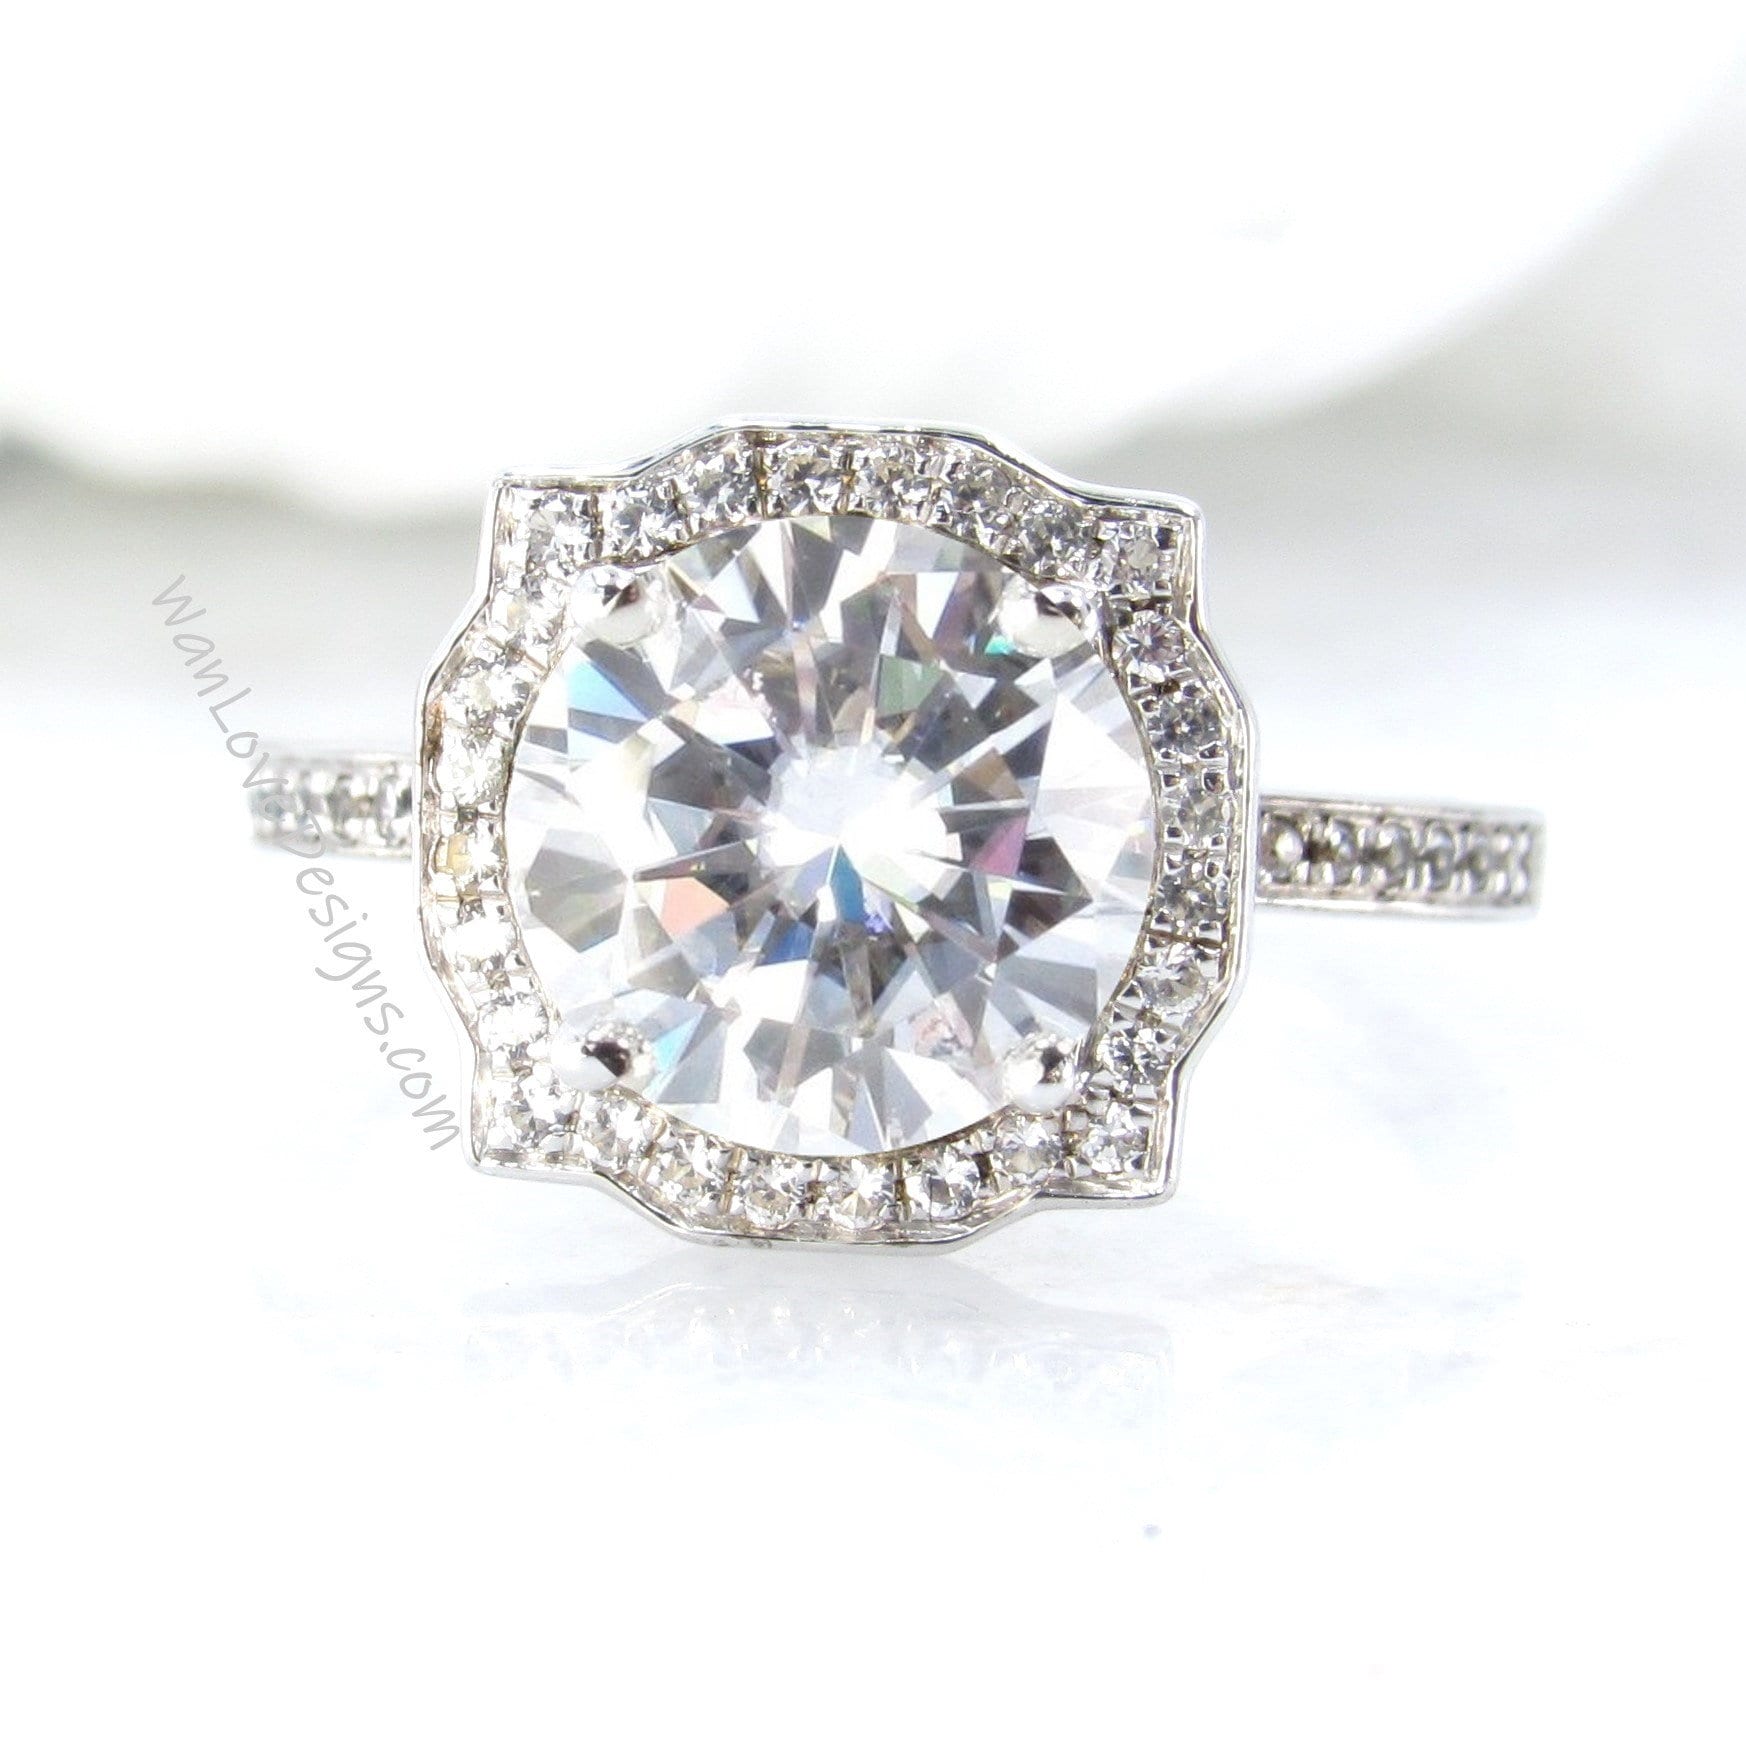 Art Deco Round Cut Diamond Engagement Ring Geometric Halo Ring Certified Diamond IGI Ring half eternity wedding Anniversary Ring gift her Wan Love Designs